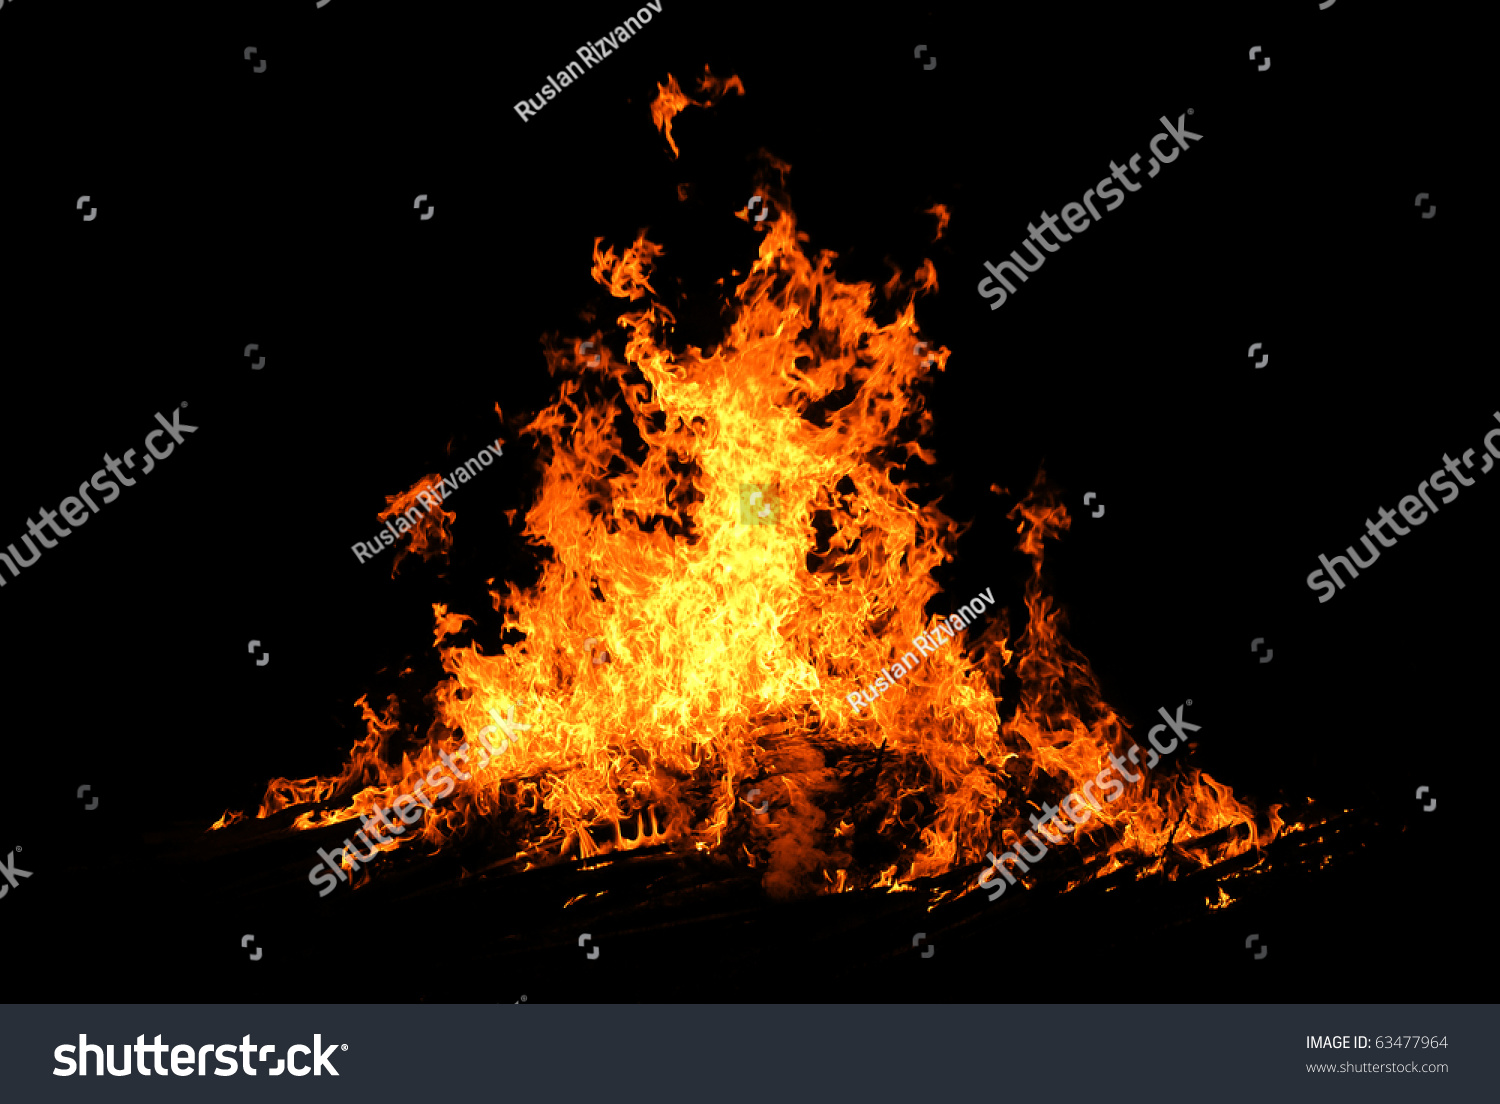 Night bonfire orange hot flames on black background in the night #63477964